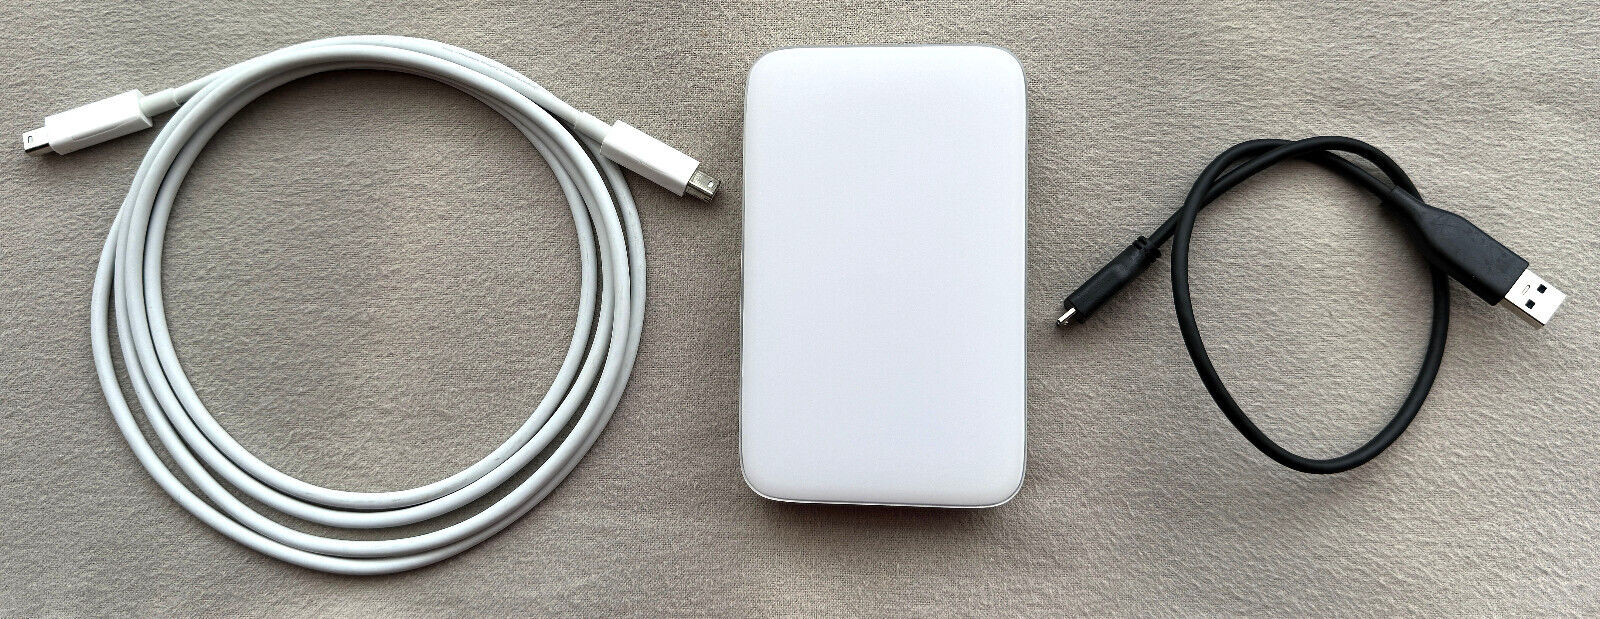 Buffalo MiniStation 1TB Thunderbolt Portable External Drive w/USB 3.0 + Cables